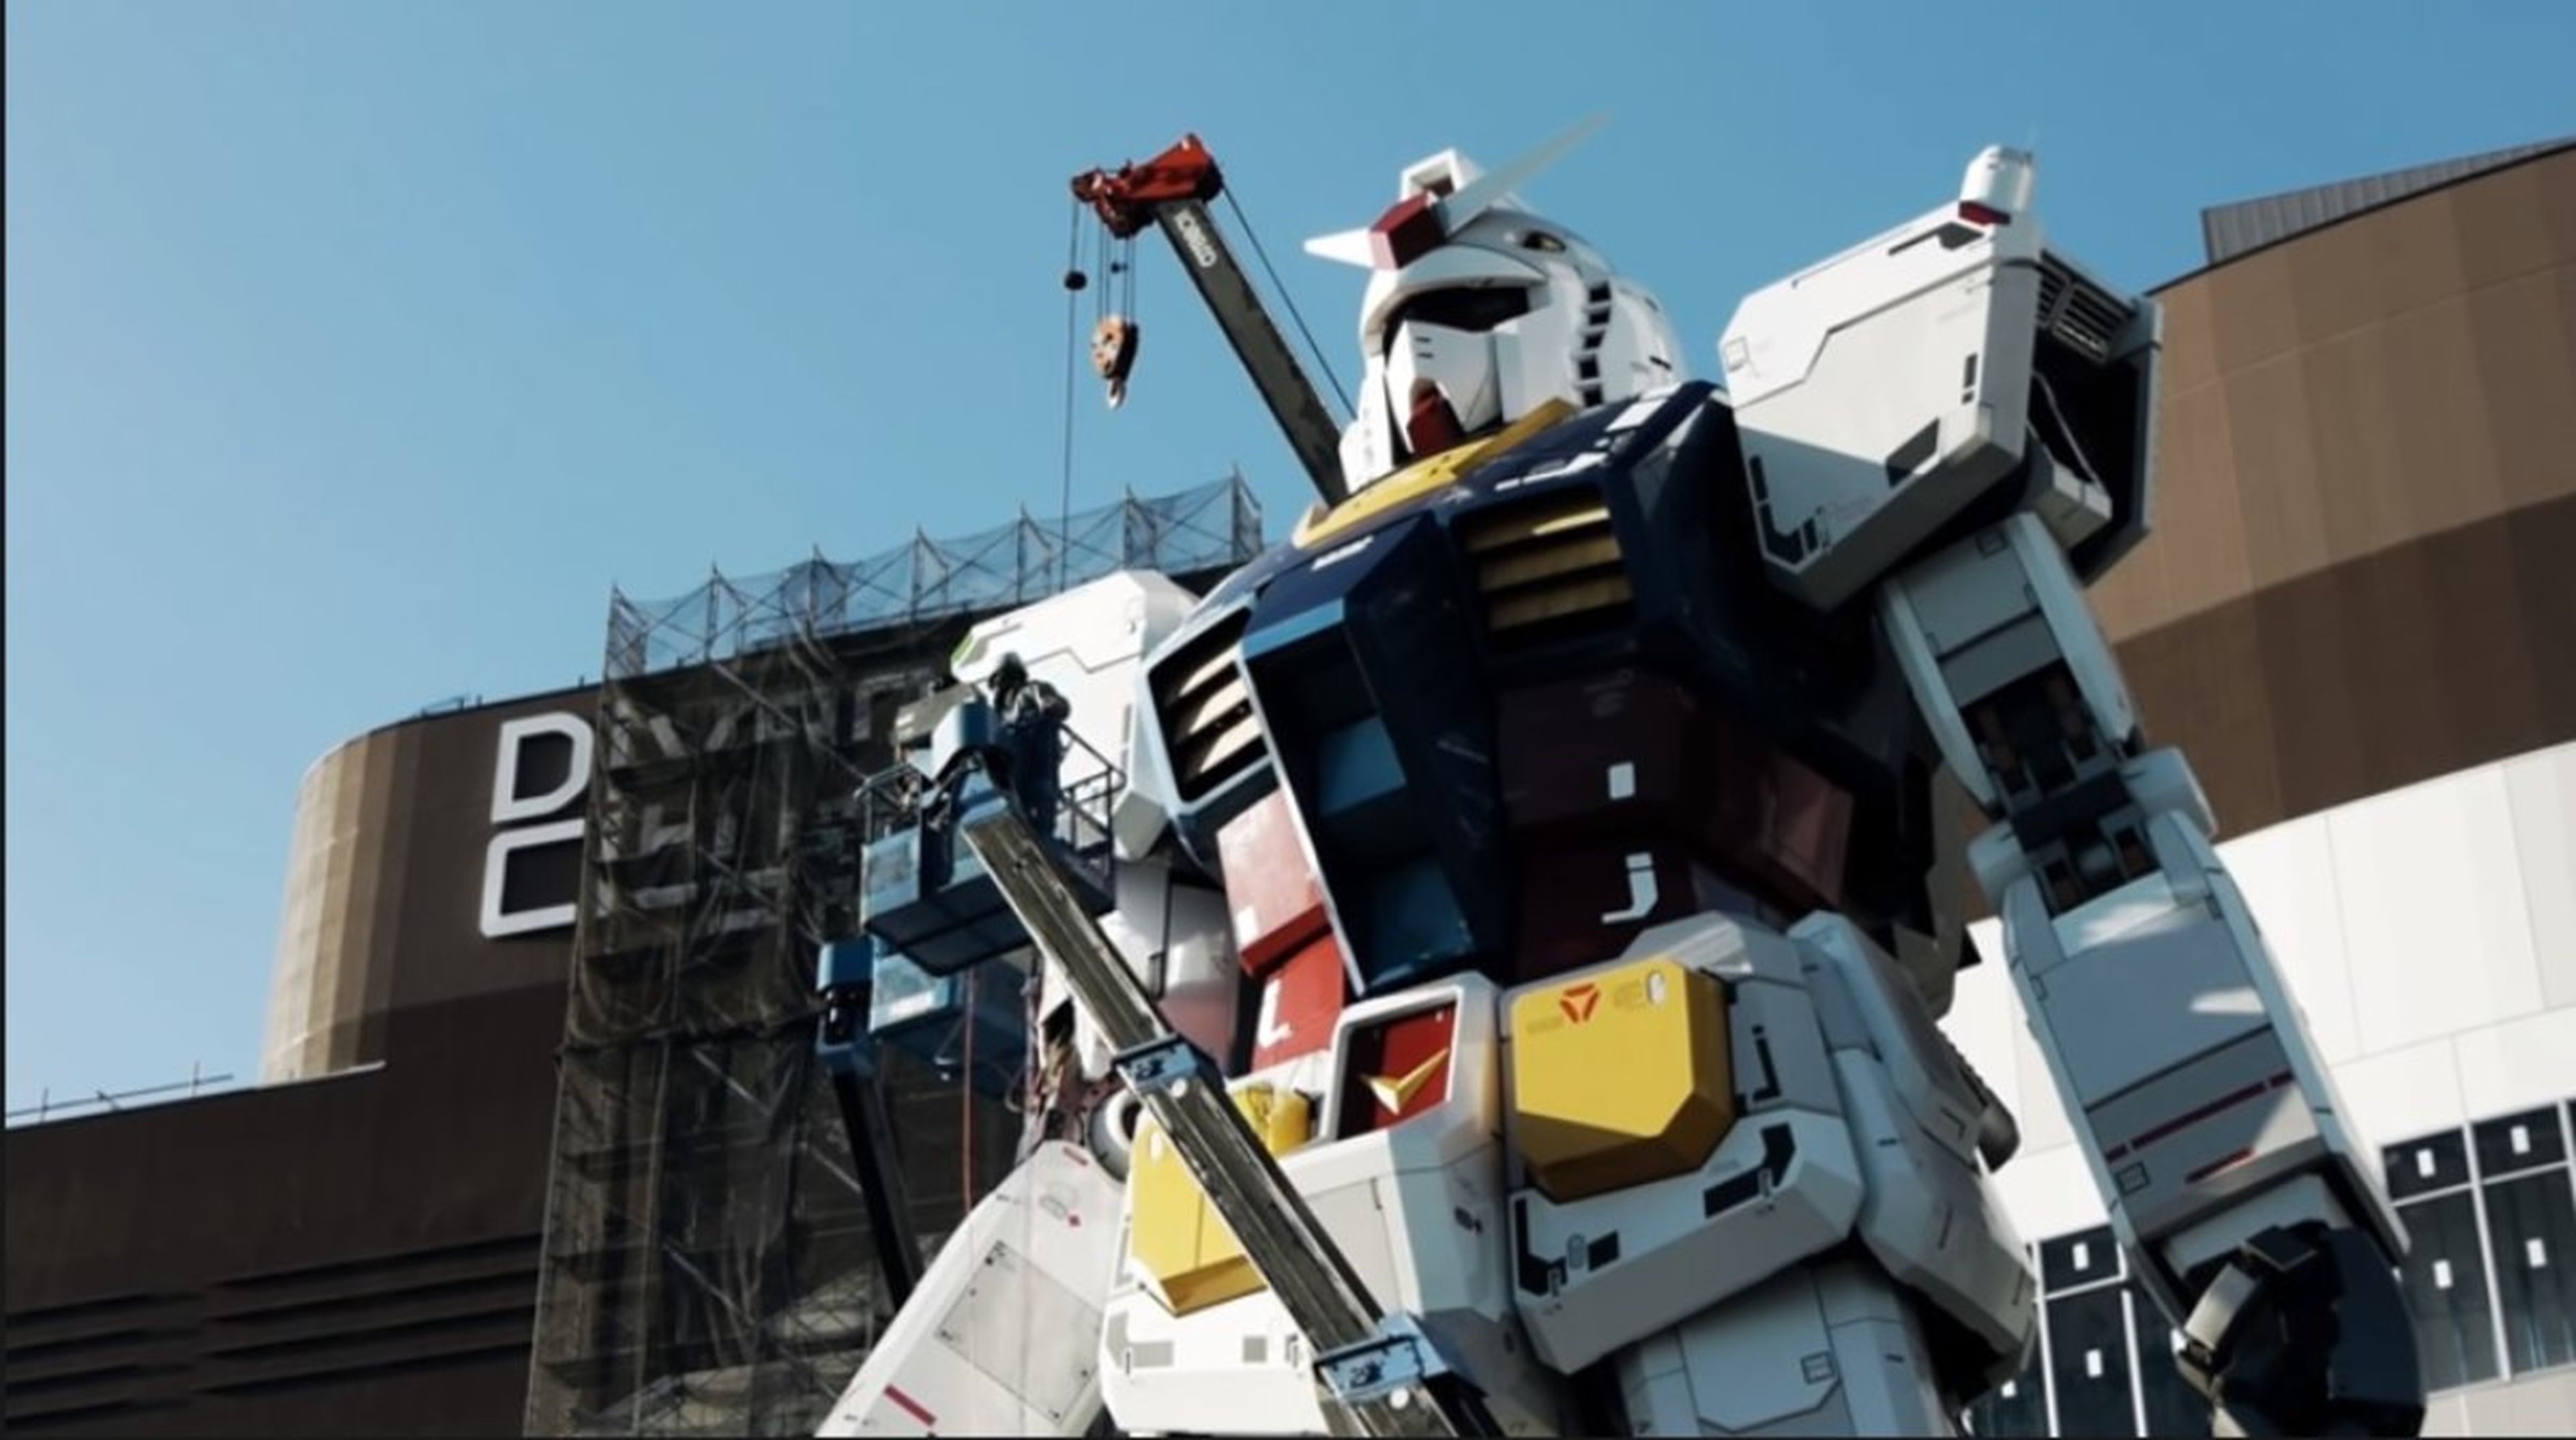 Gundam, un robot gigante construido por ingenieros japoneses.